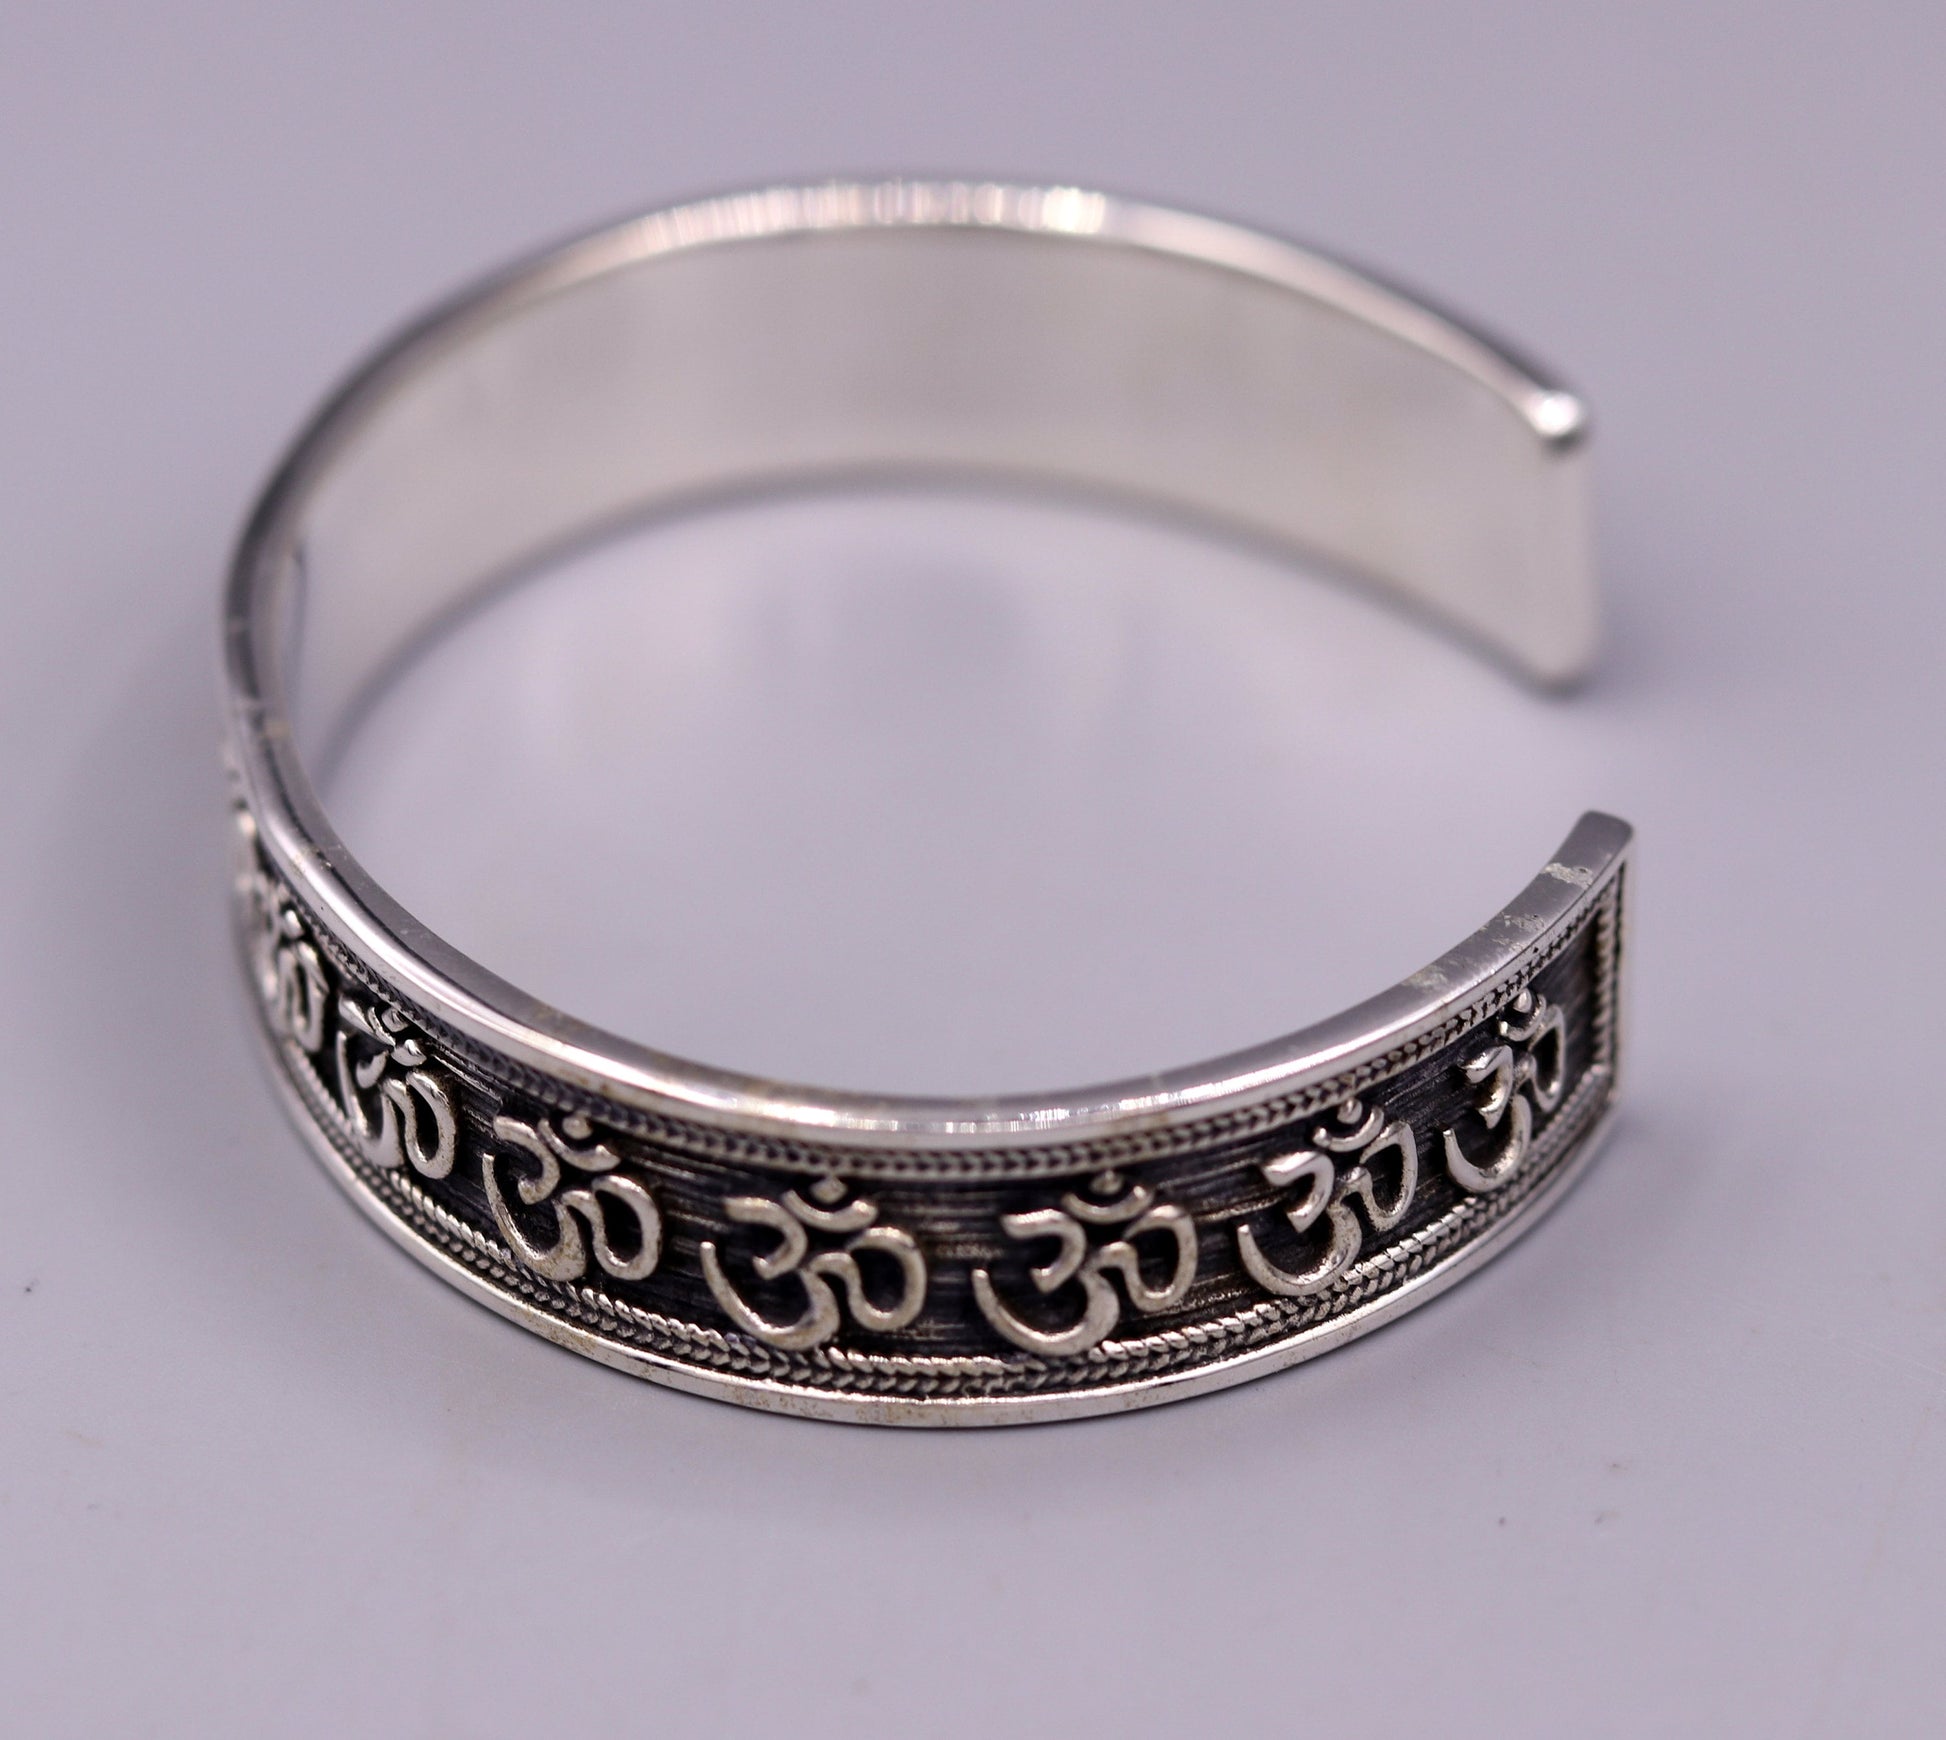 925 sterling silver or Gold polished handcrafted 'AUM' mantra bangle bracelet adjustable kada unisex ethnic stylish jewelry india Gnsk140 - TRIBAL ORNAMENTS